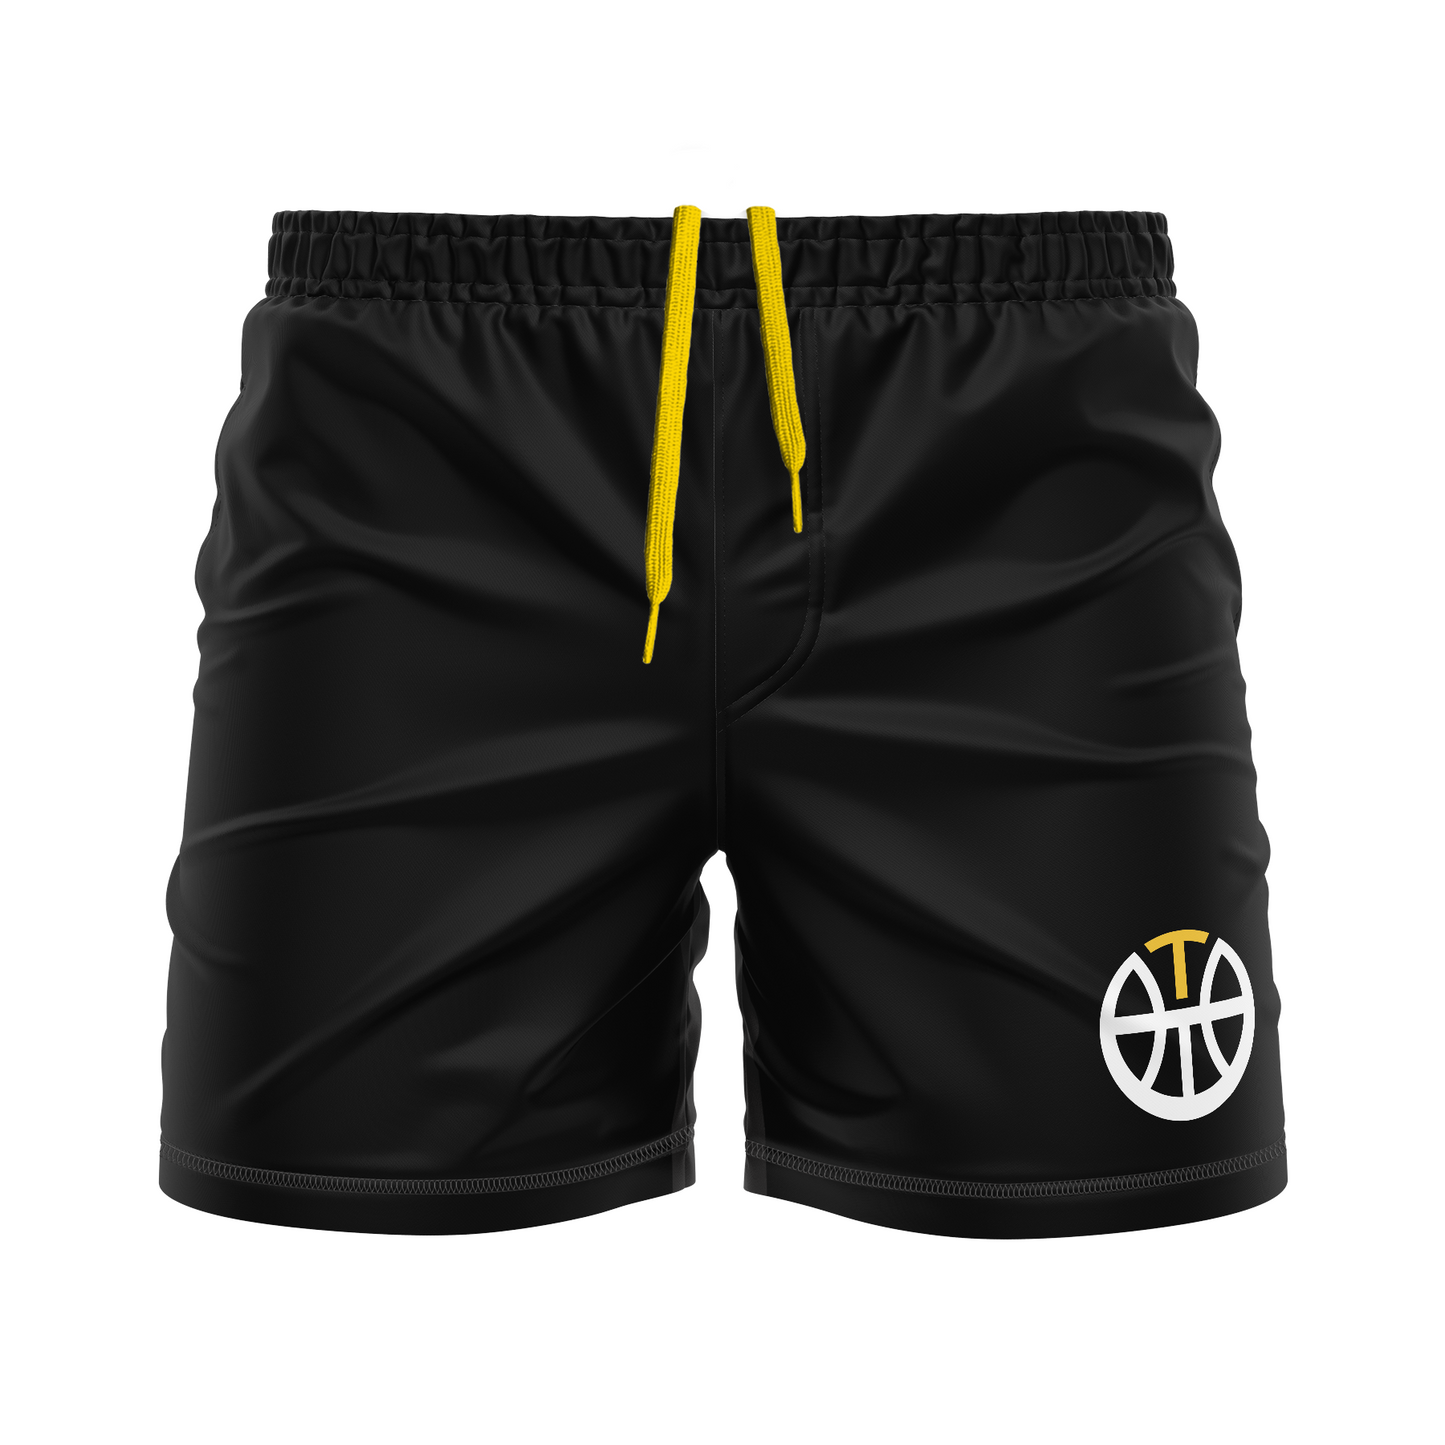 Triumph Basketball FC shorts Standard Issue, black